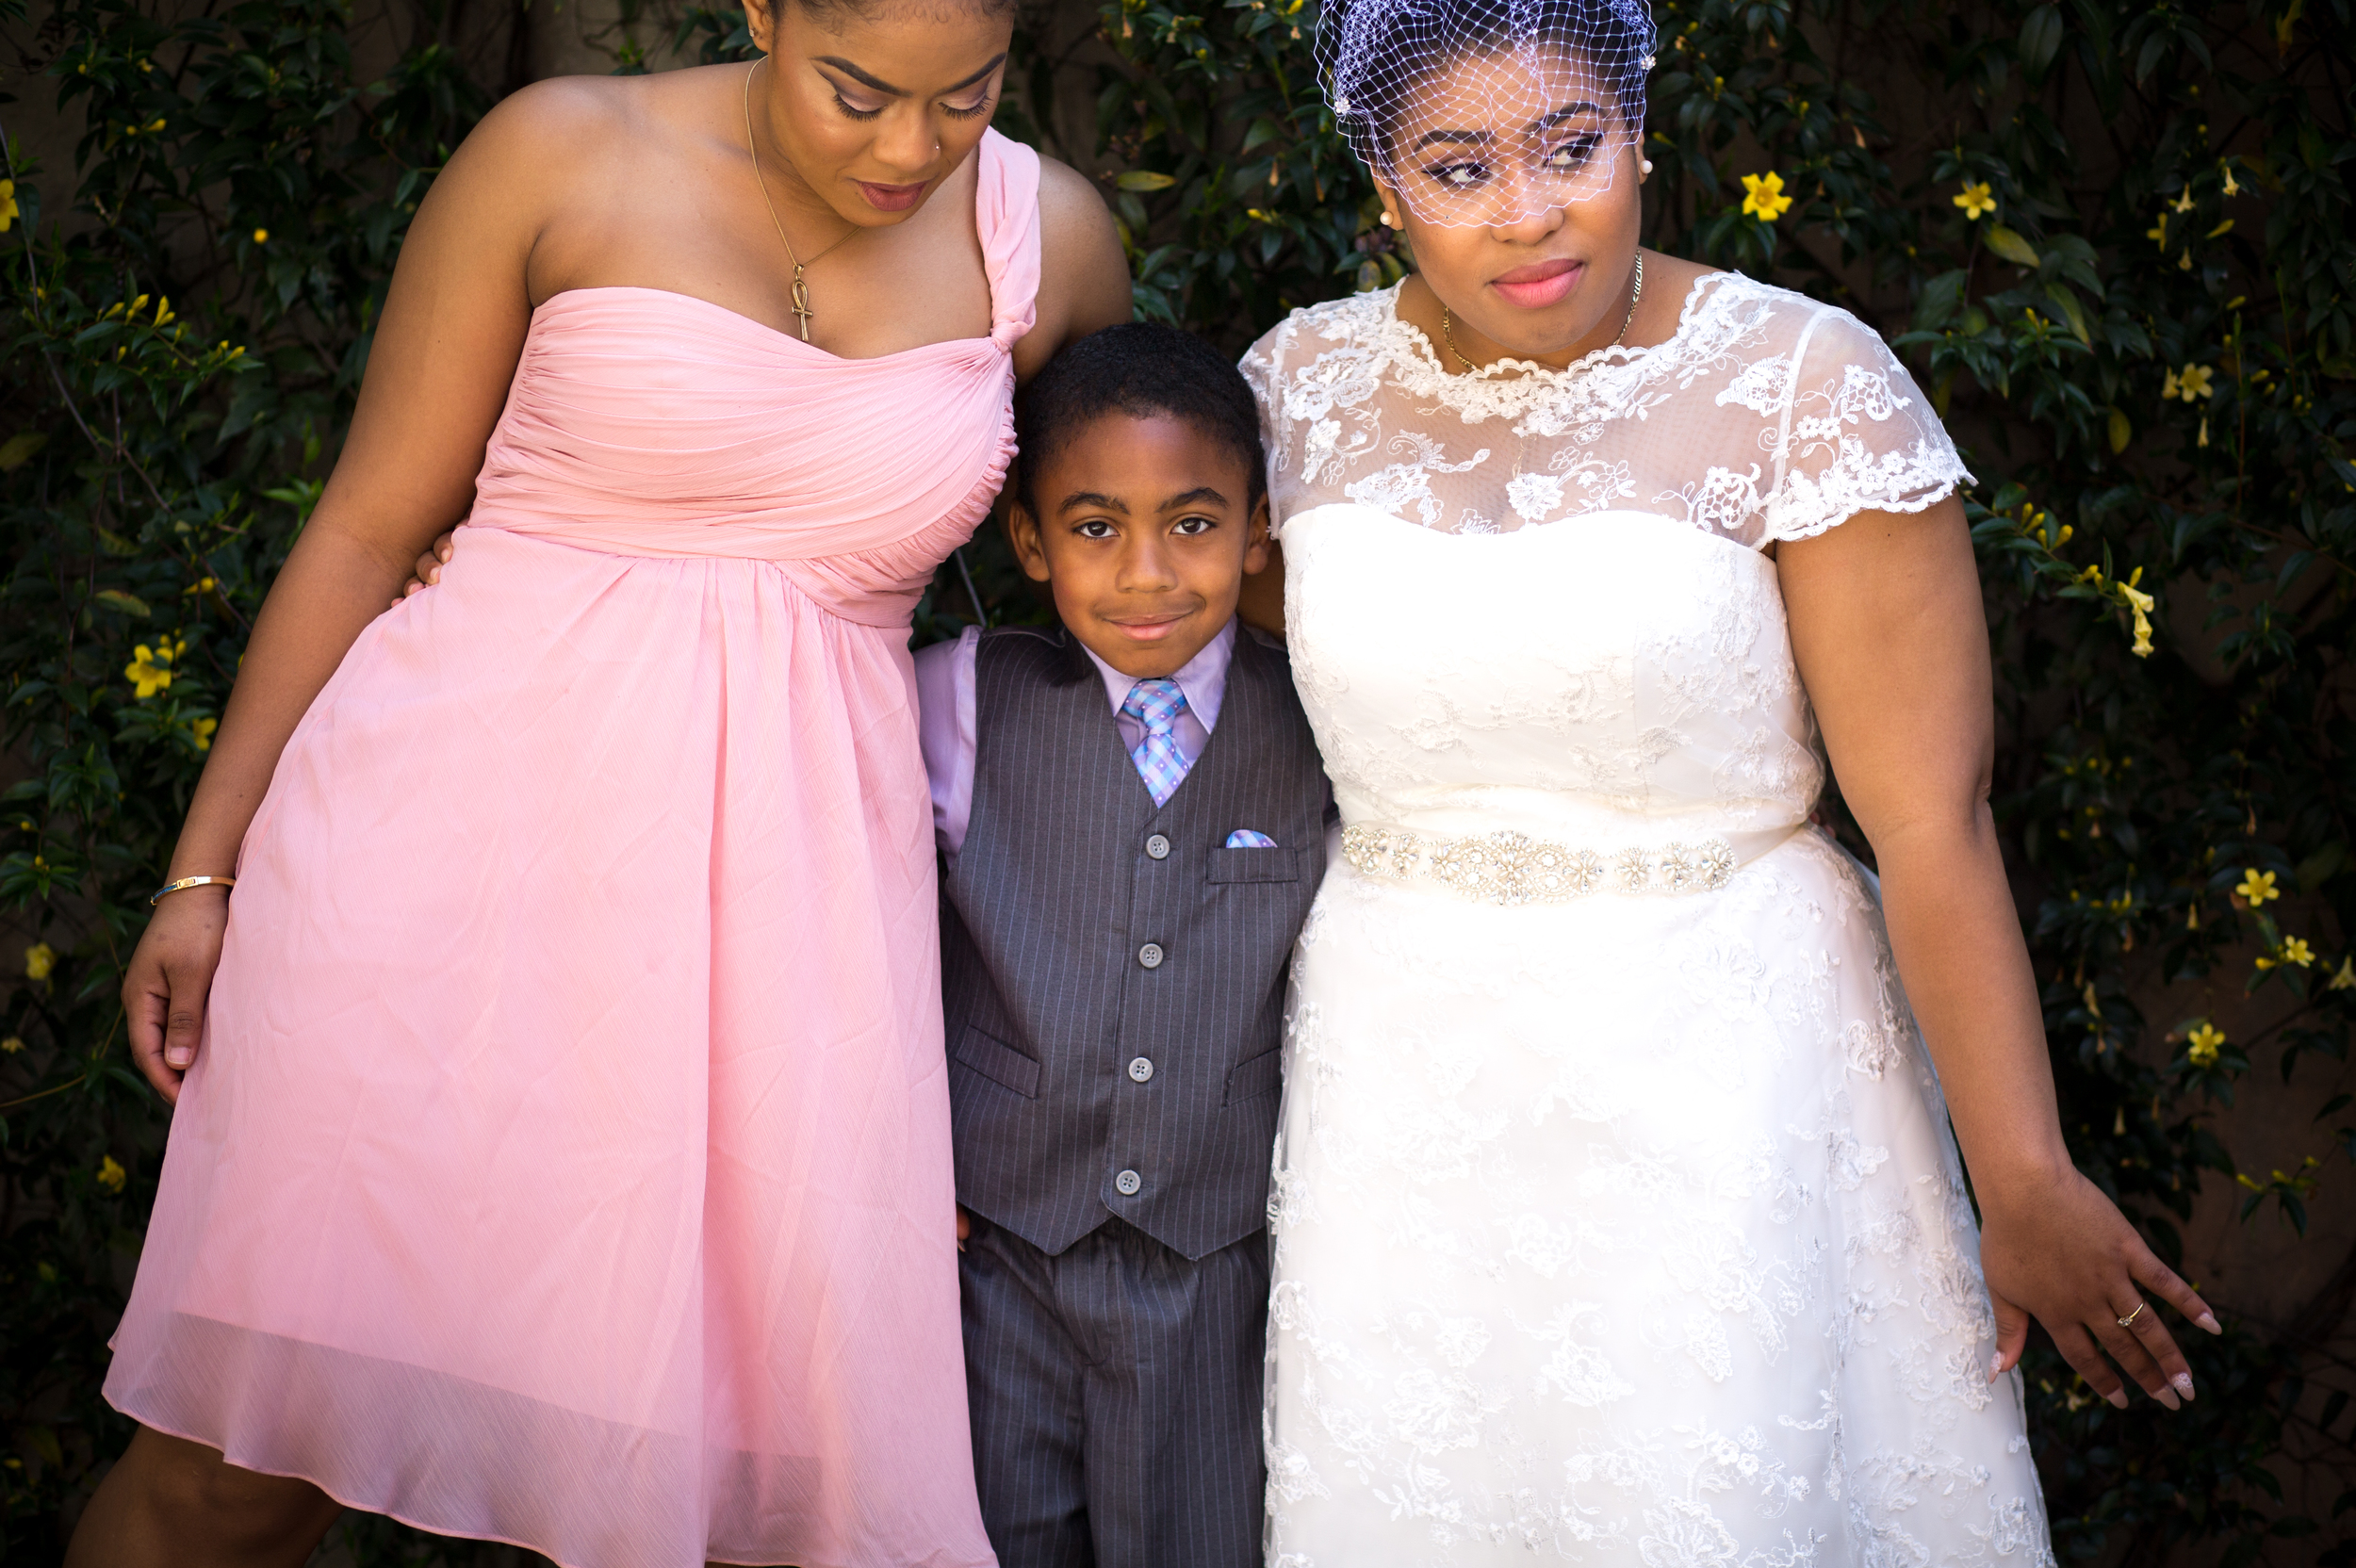 Sasha + Isiah's Courthouse Wedding | Durham, NC | Merritt Chesson Photography